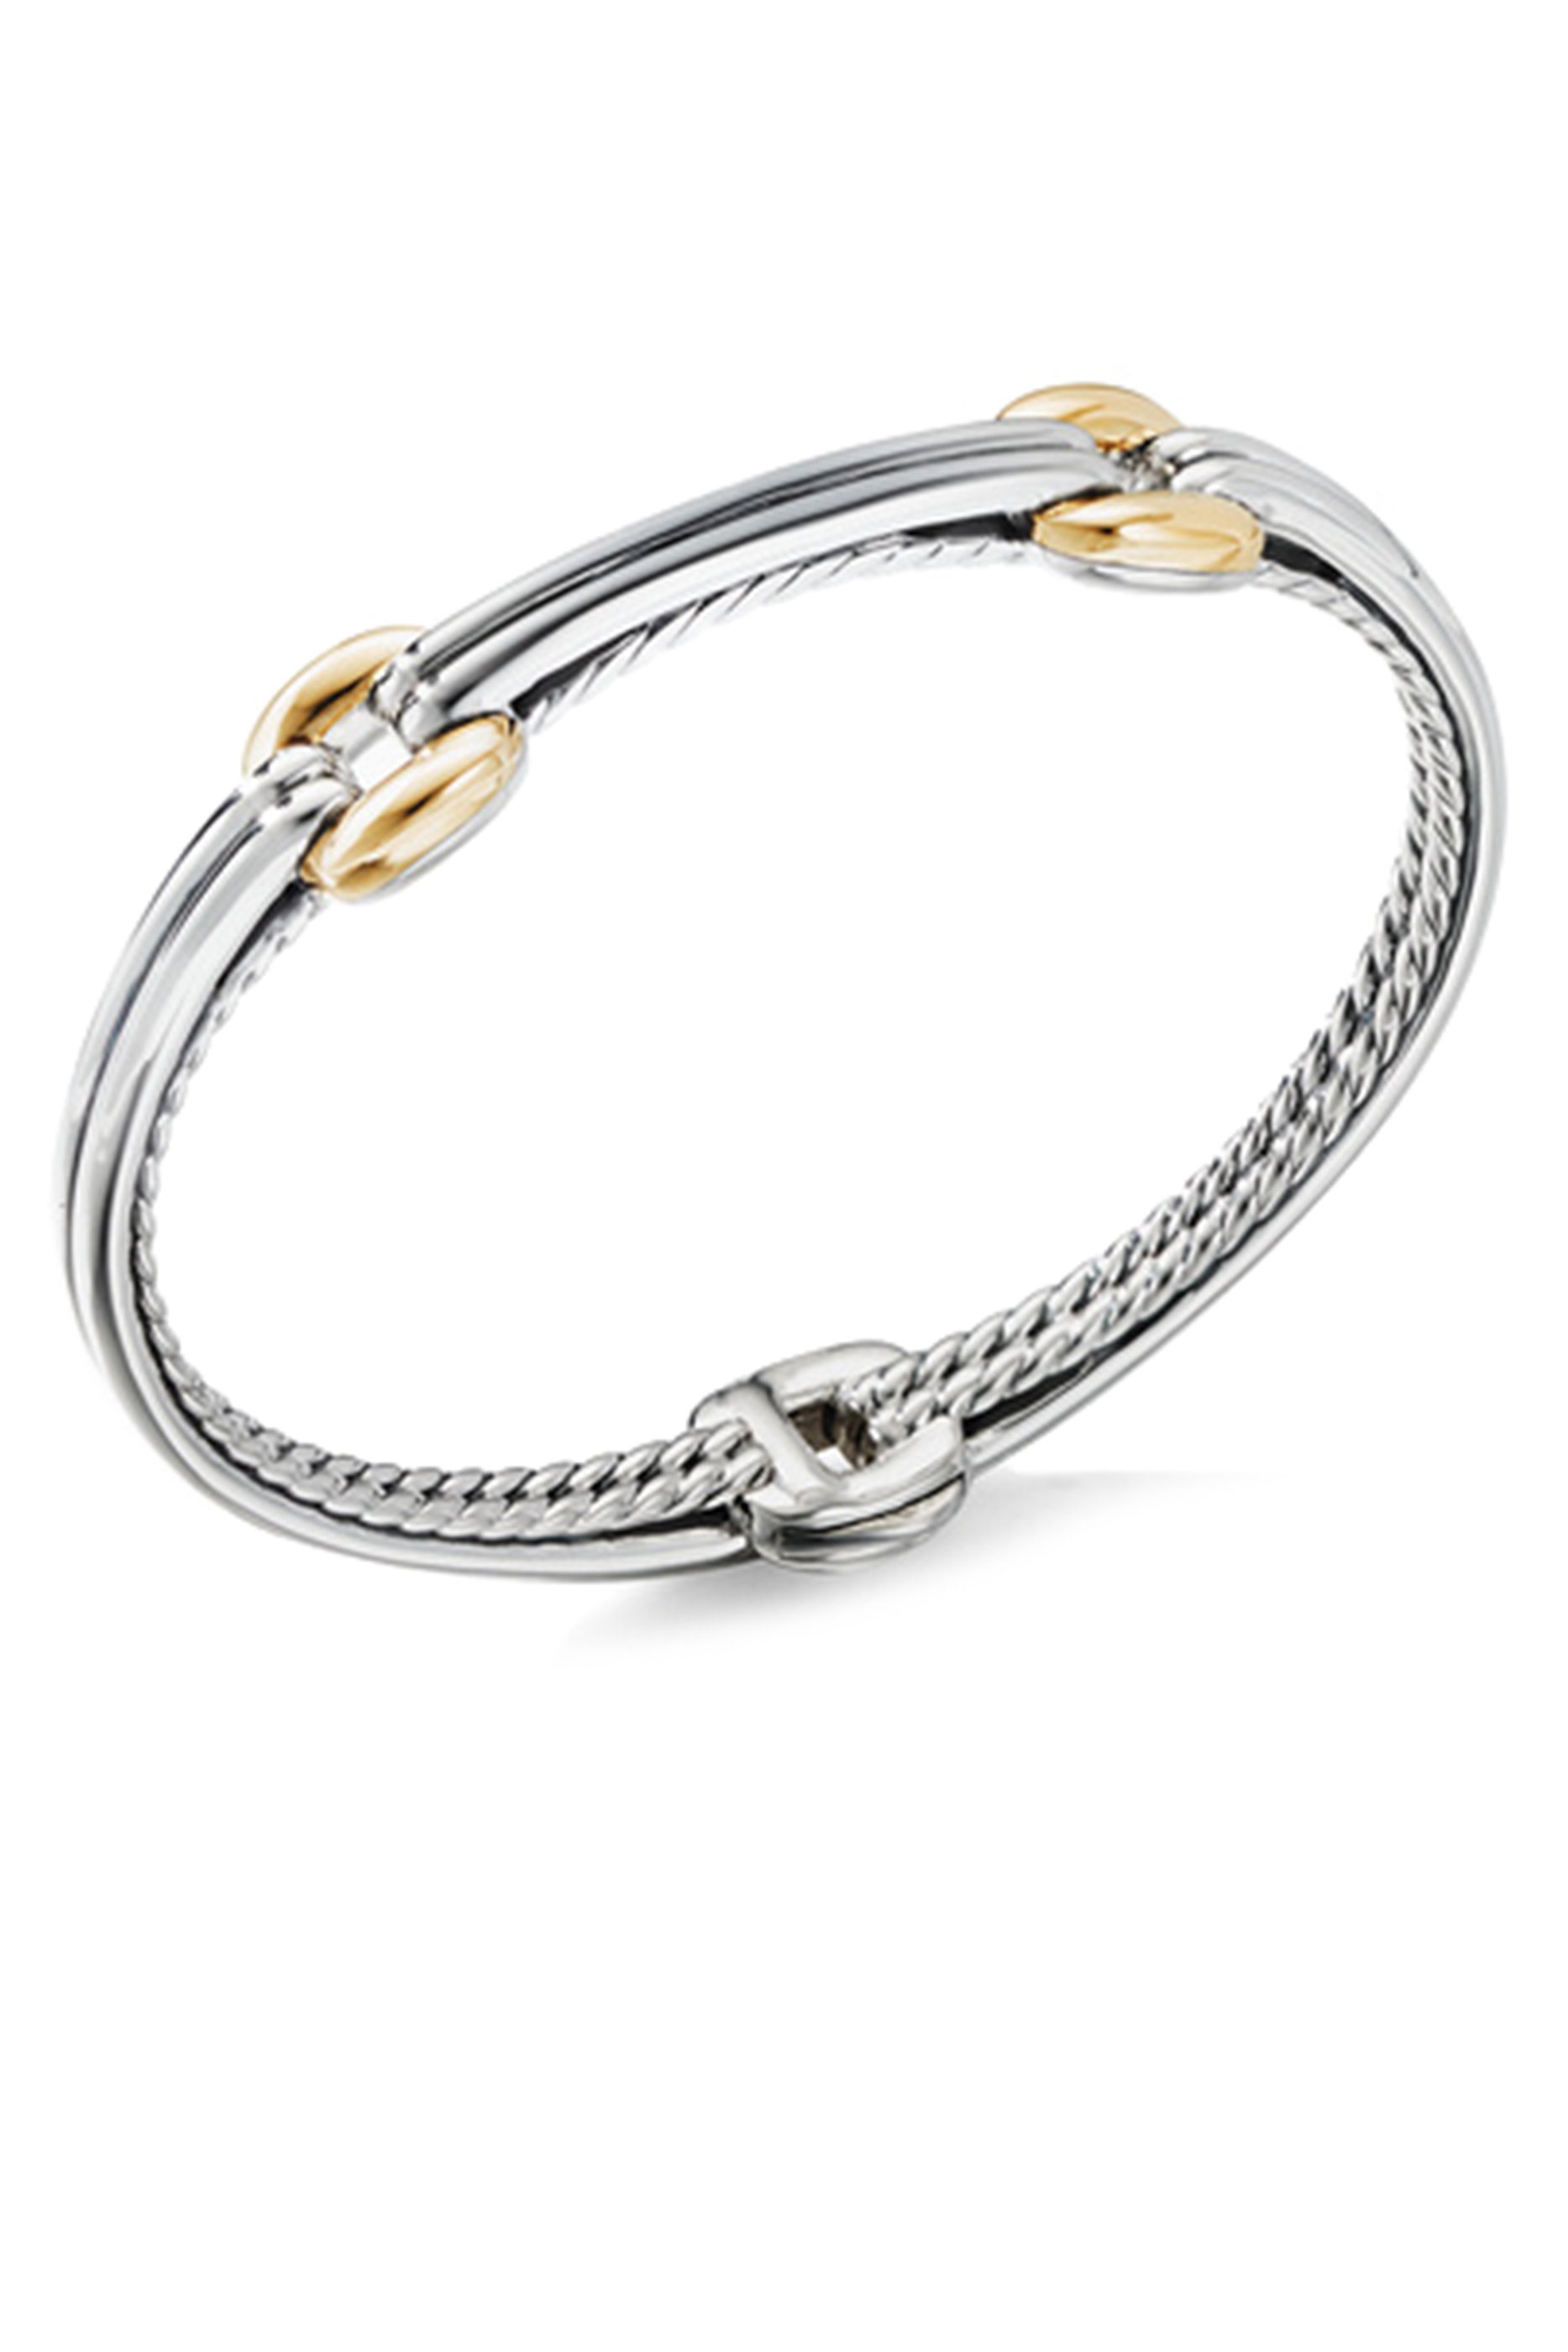 Buy David Yurman Thoroughbred Double Link Bracelet for Womens ...